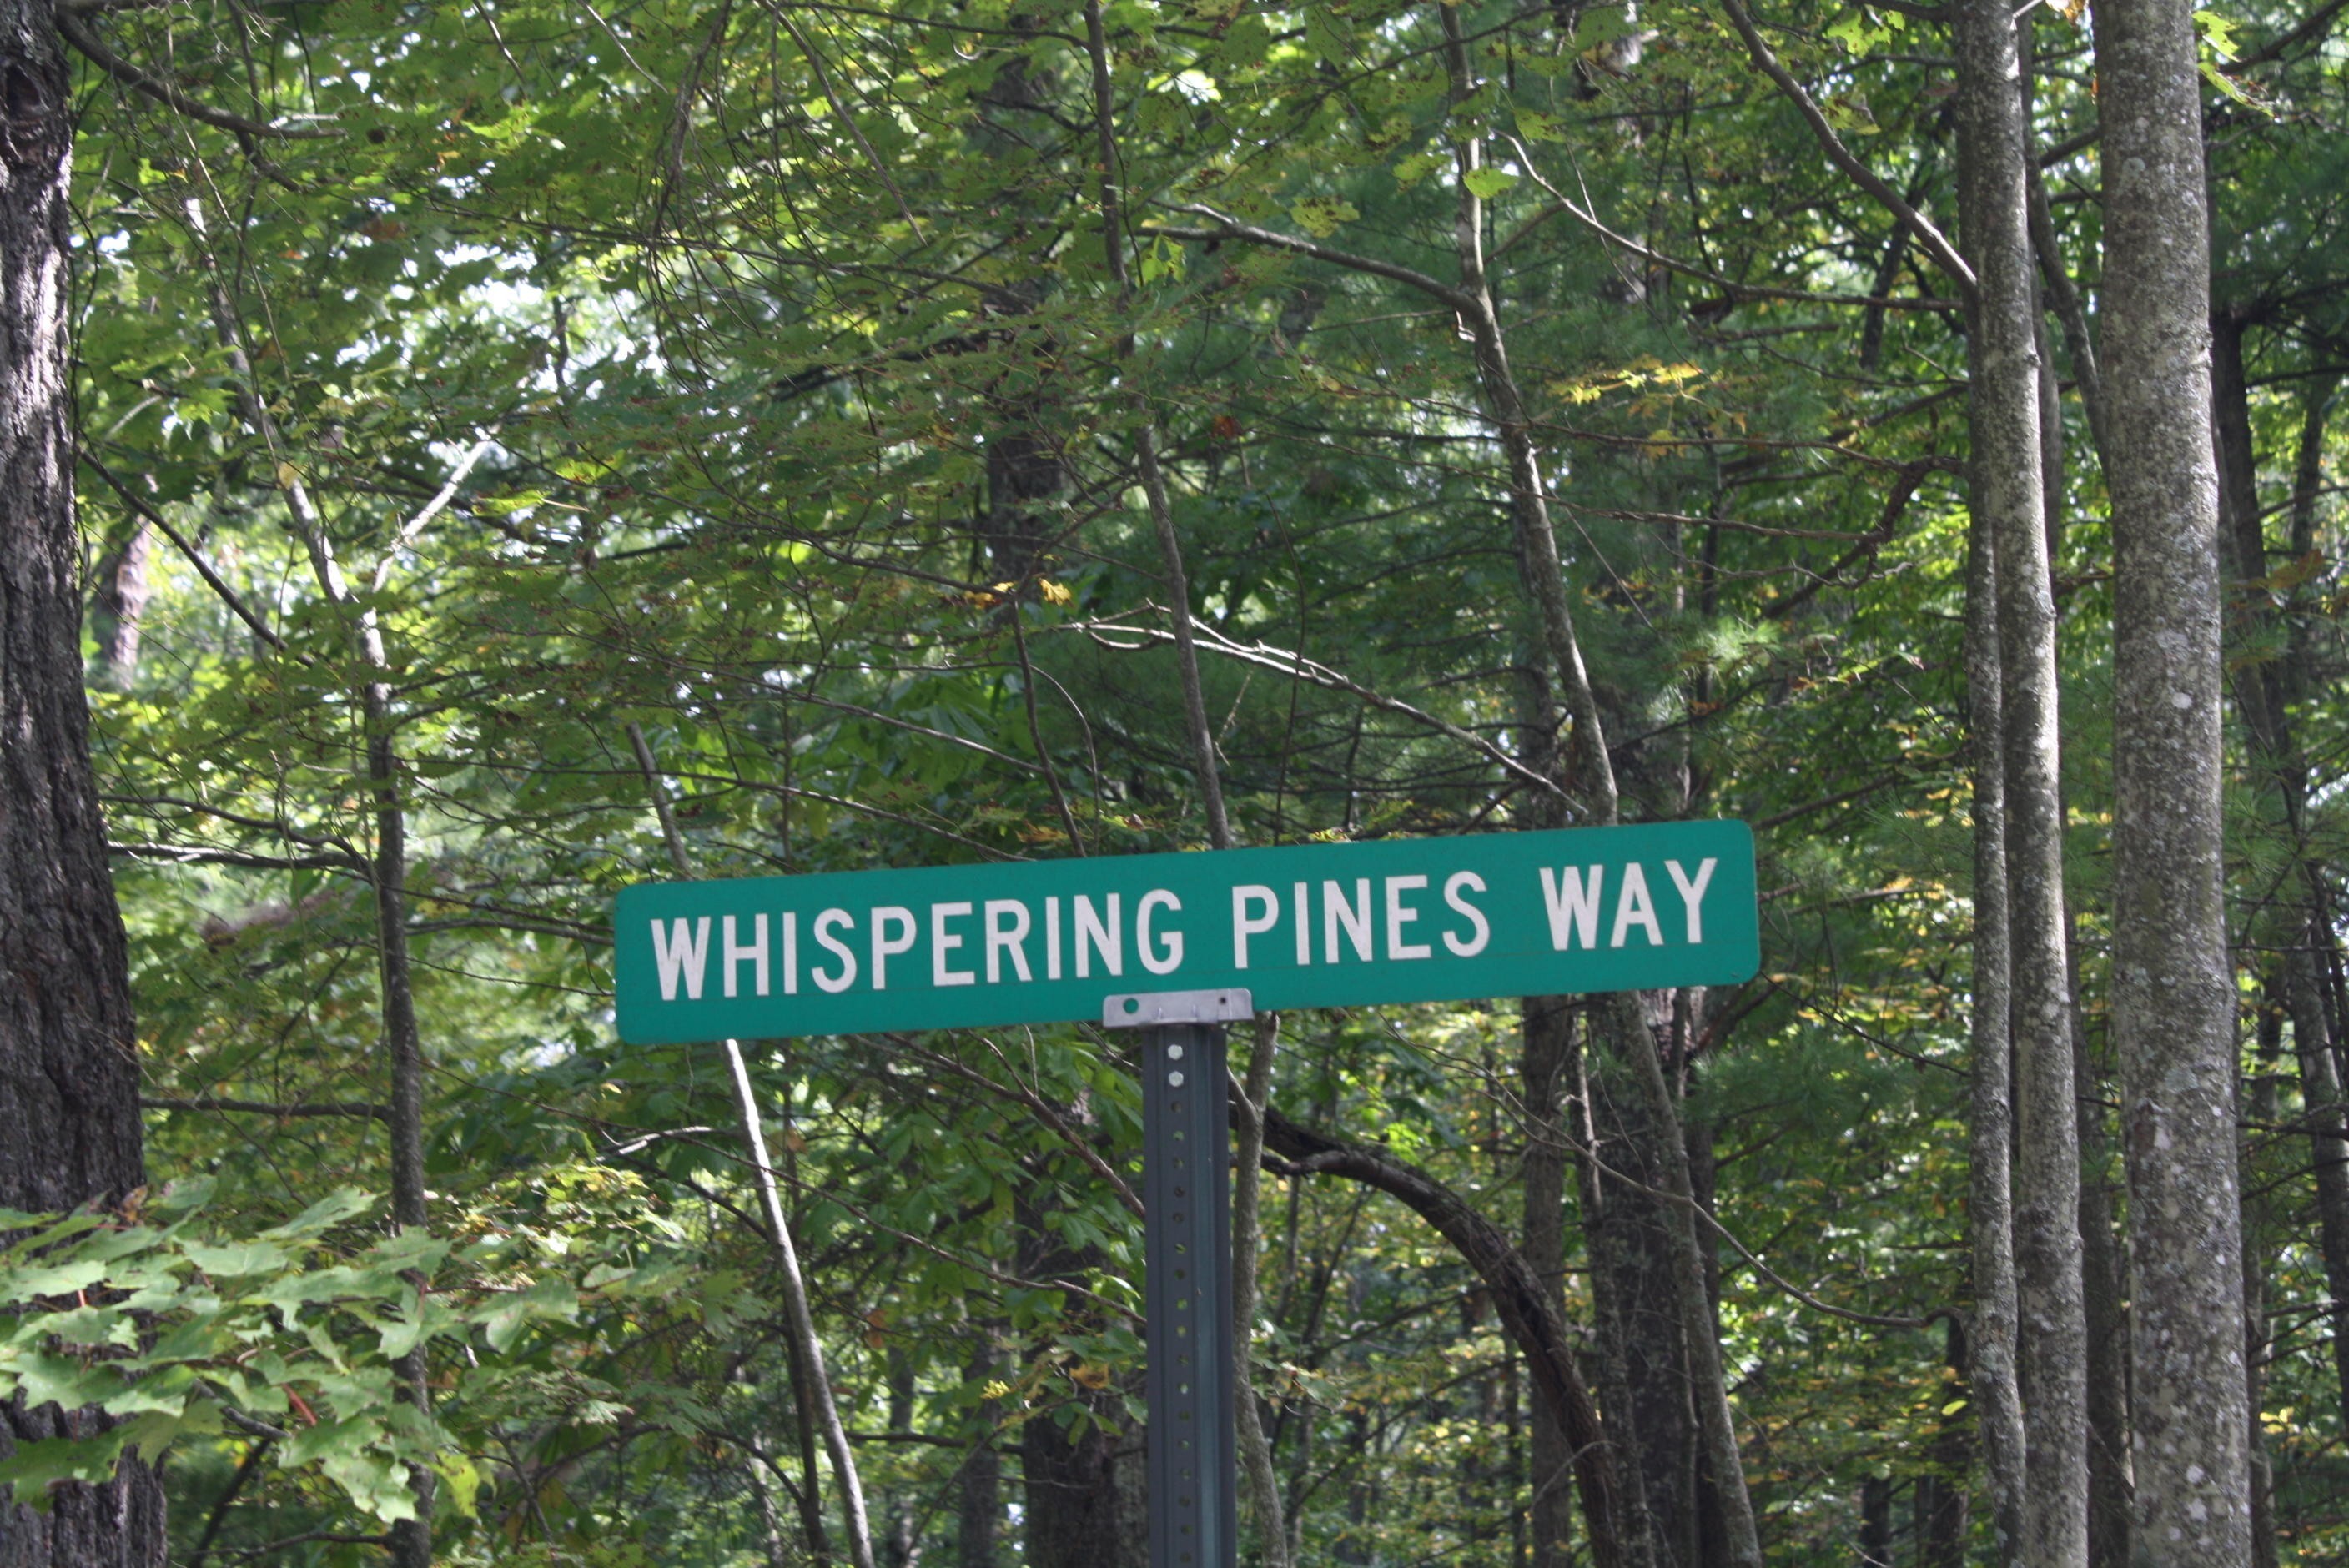 2. Lot 41 Whispering Pines Way